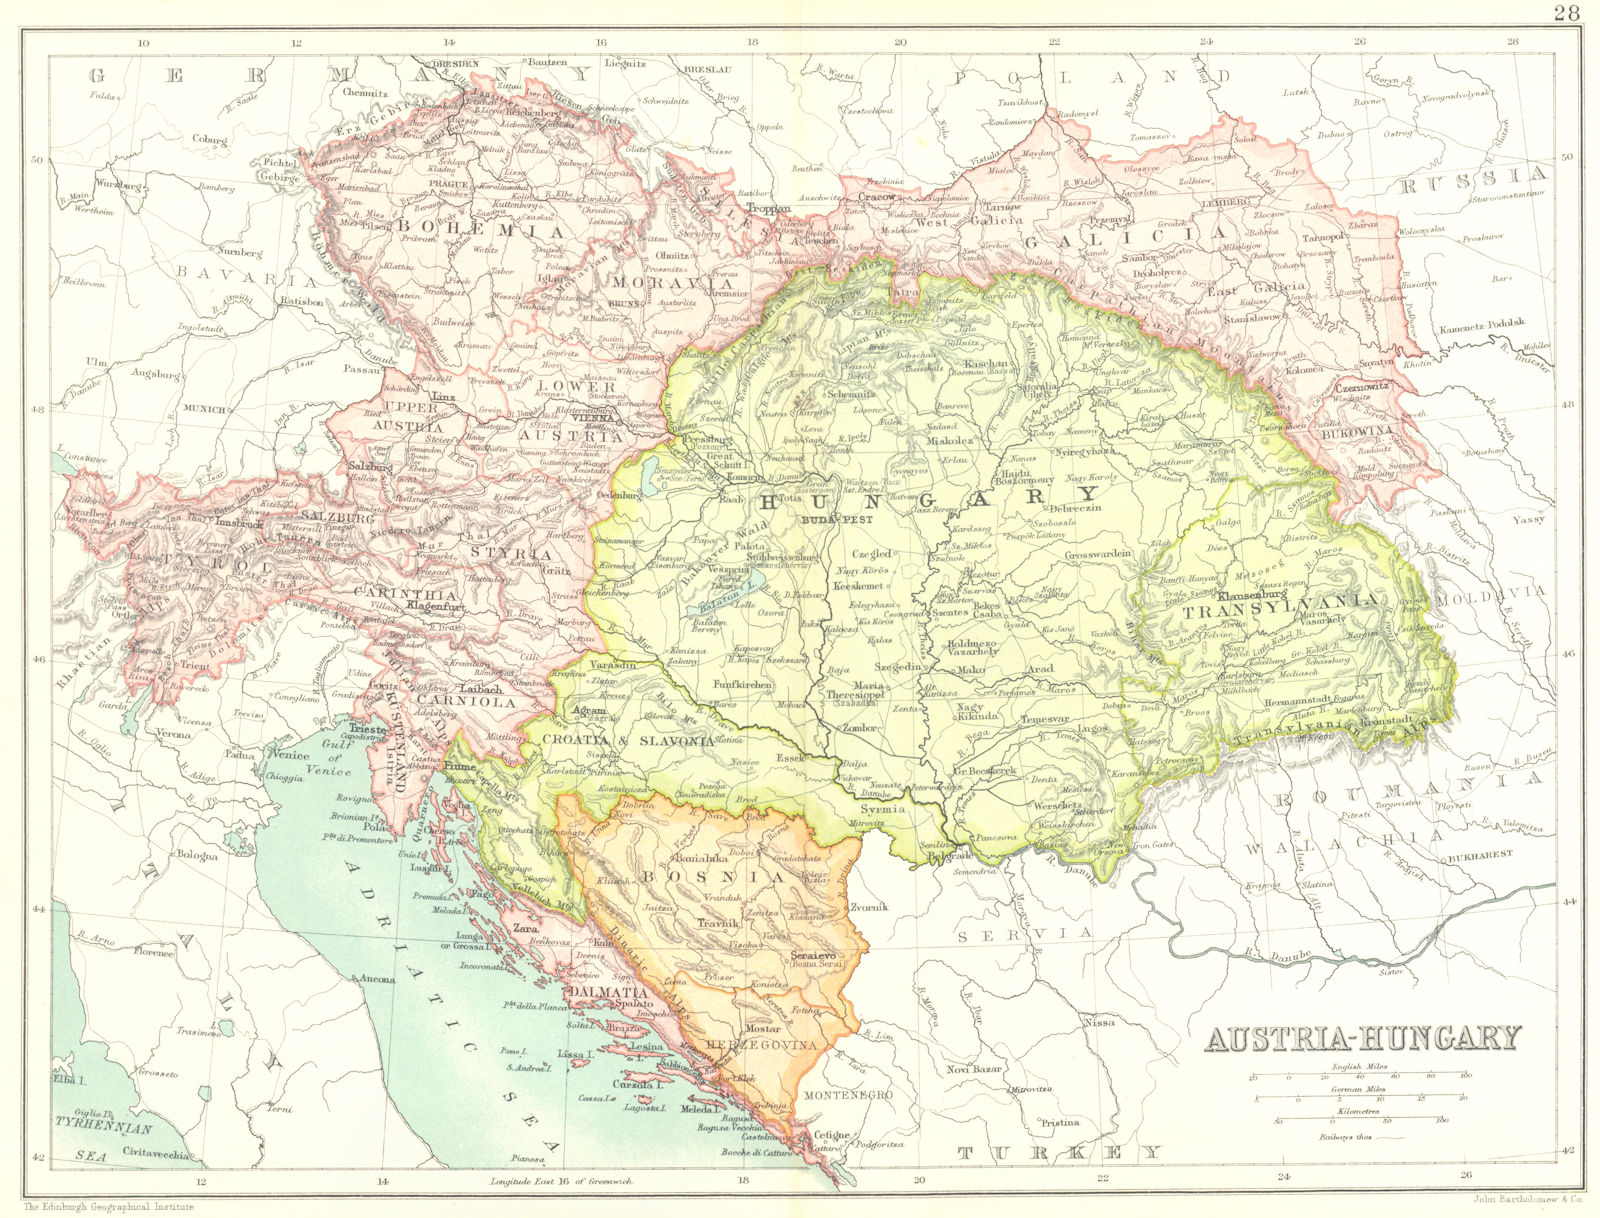 AUSTRIA-HUNGARY. Bosnia Dalmatia Bohemia Galicia Tyrol Moravia Styria 1909 map